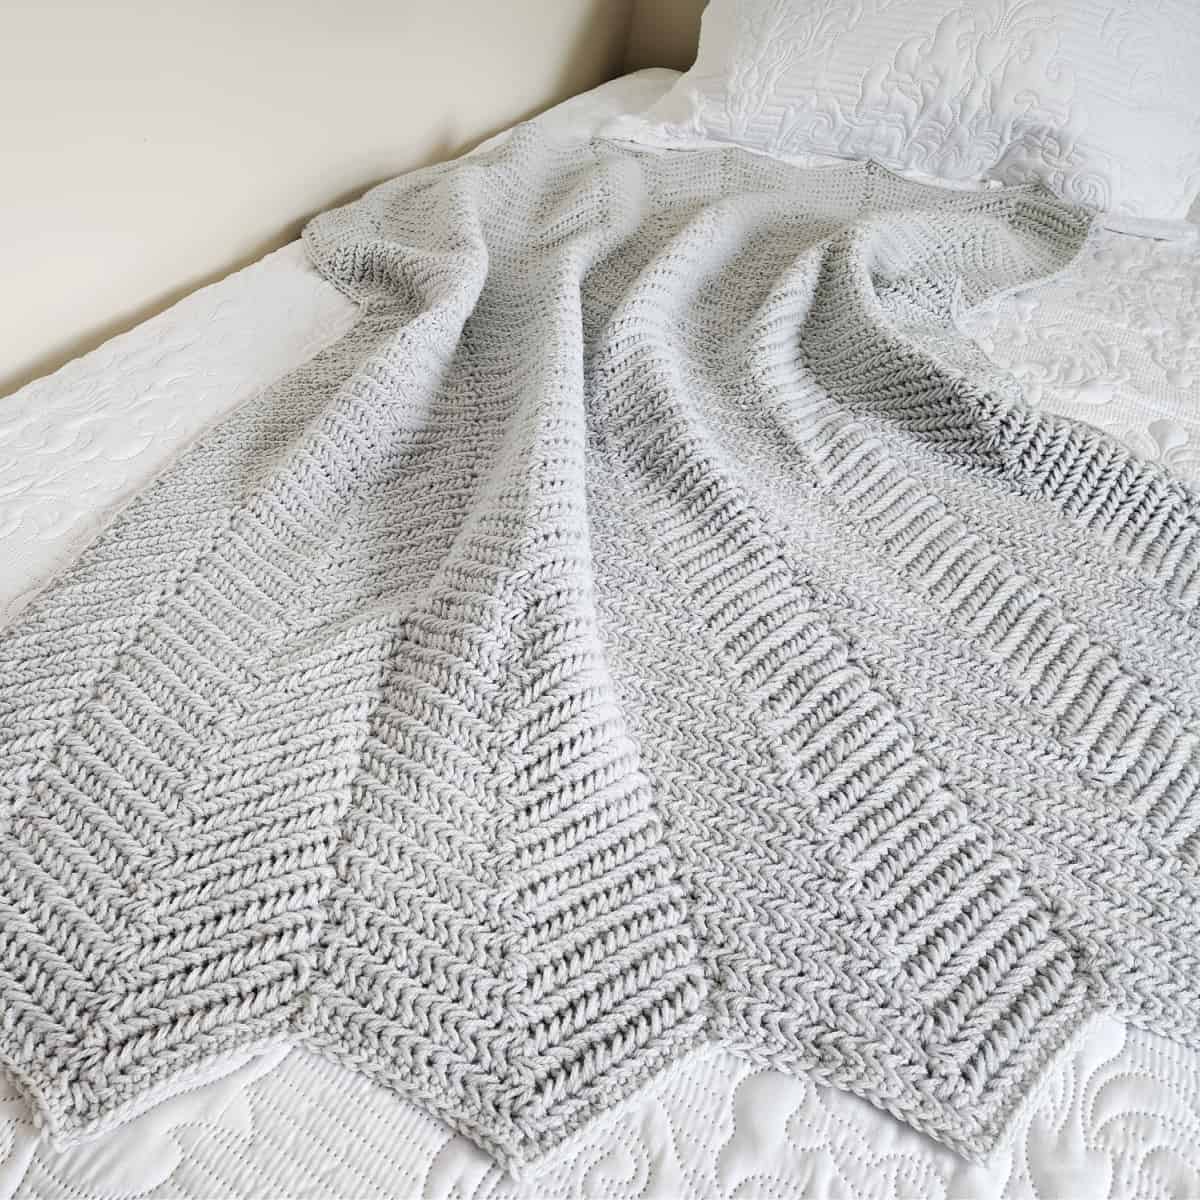 Light grey crochet ripple blanket laying on bed.